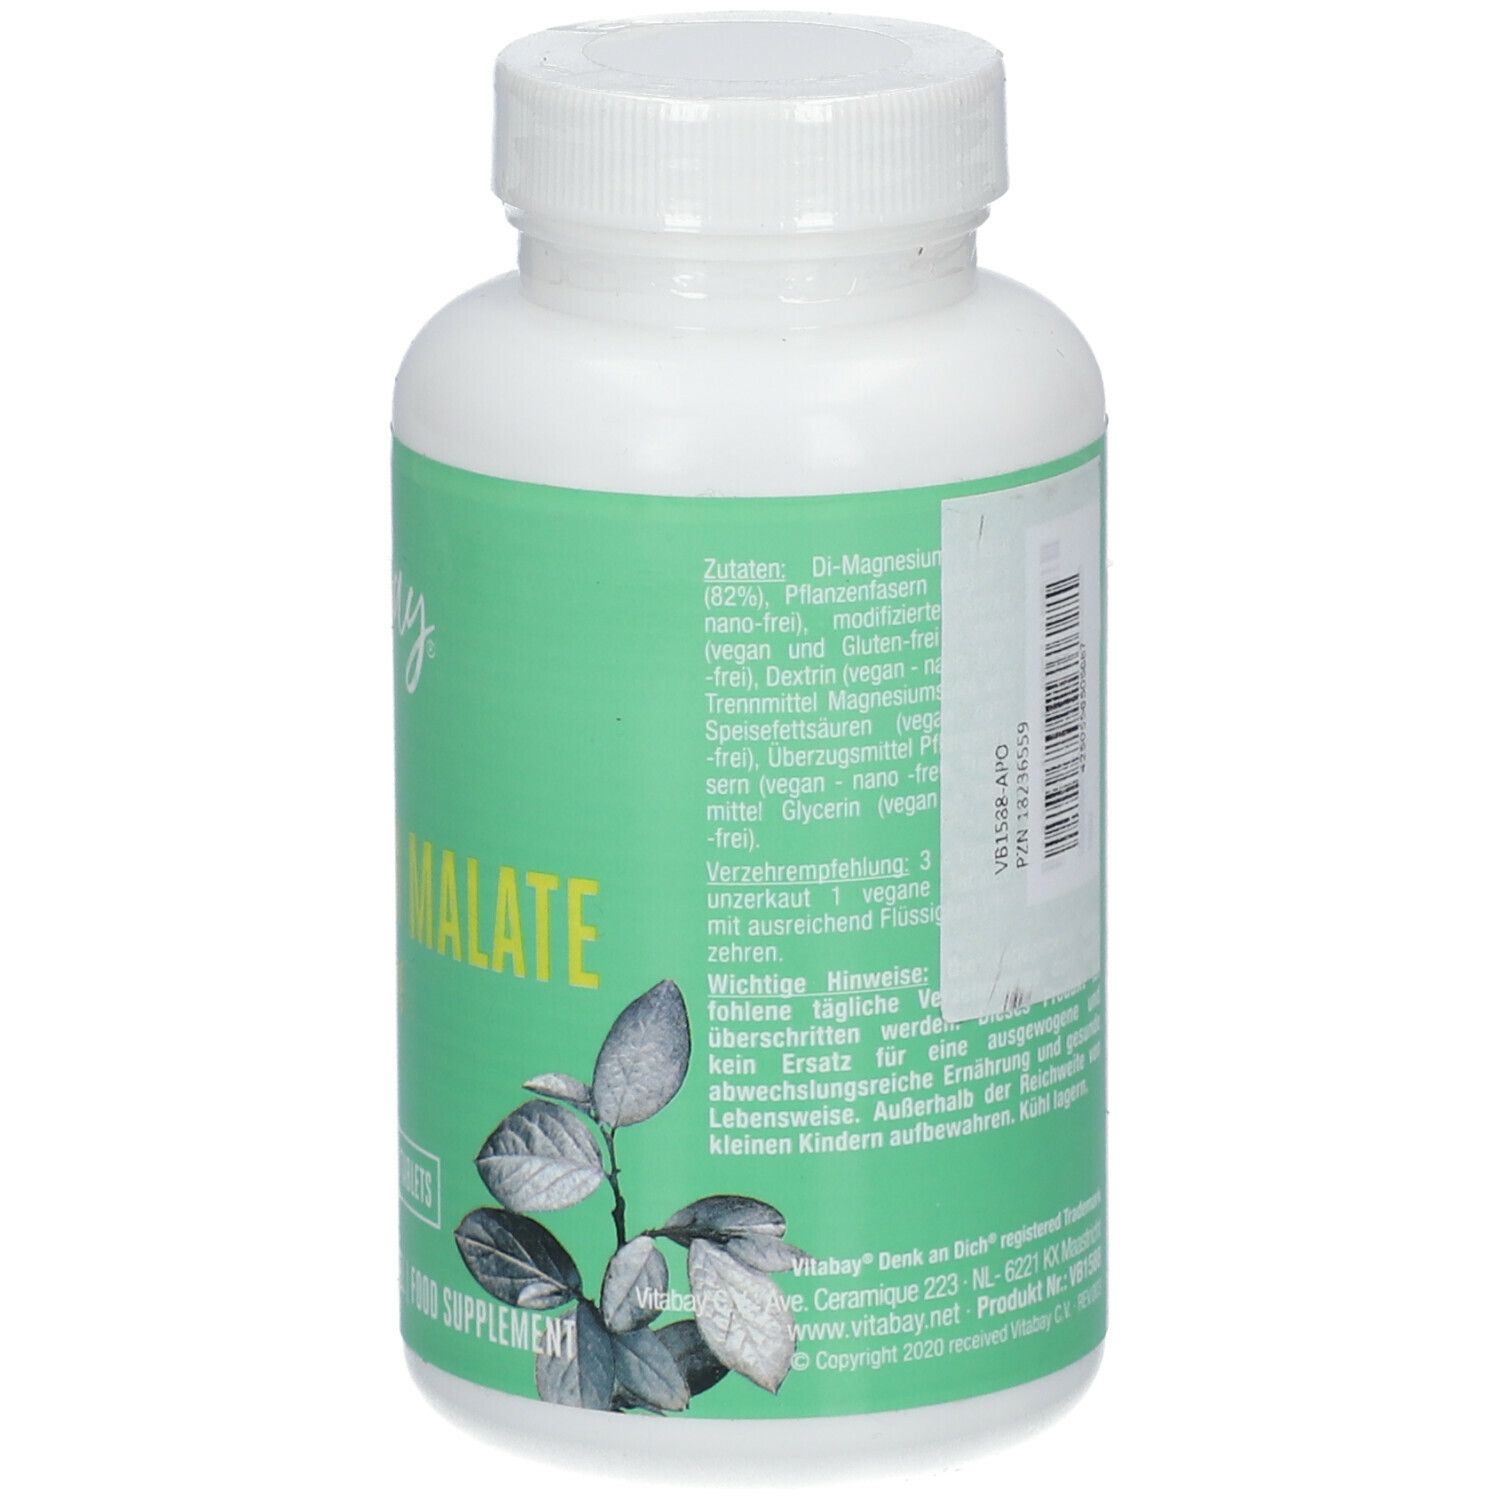 vitabay Magnesium Malate 1000 mg